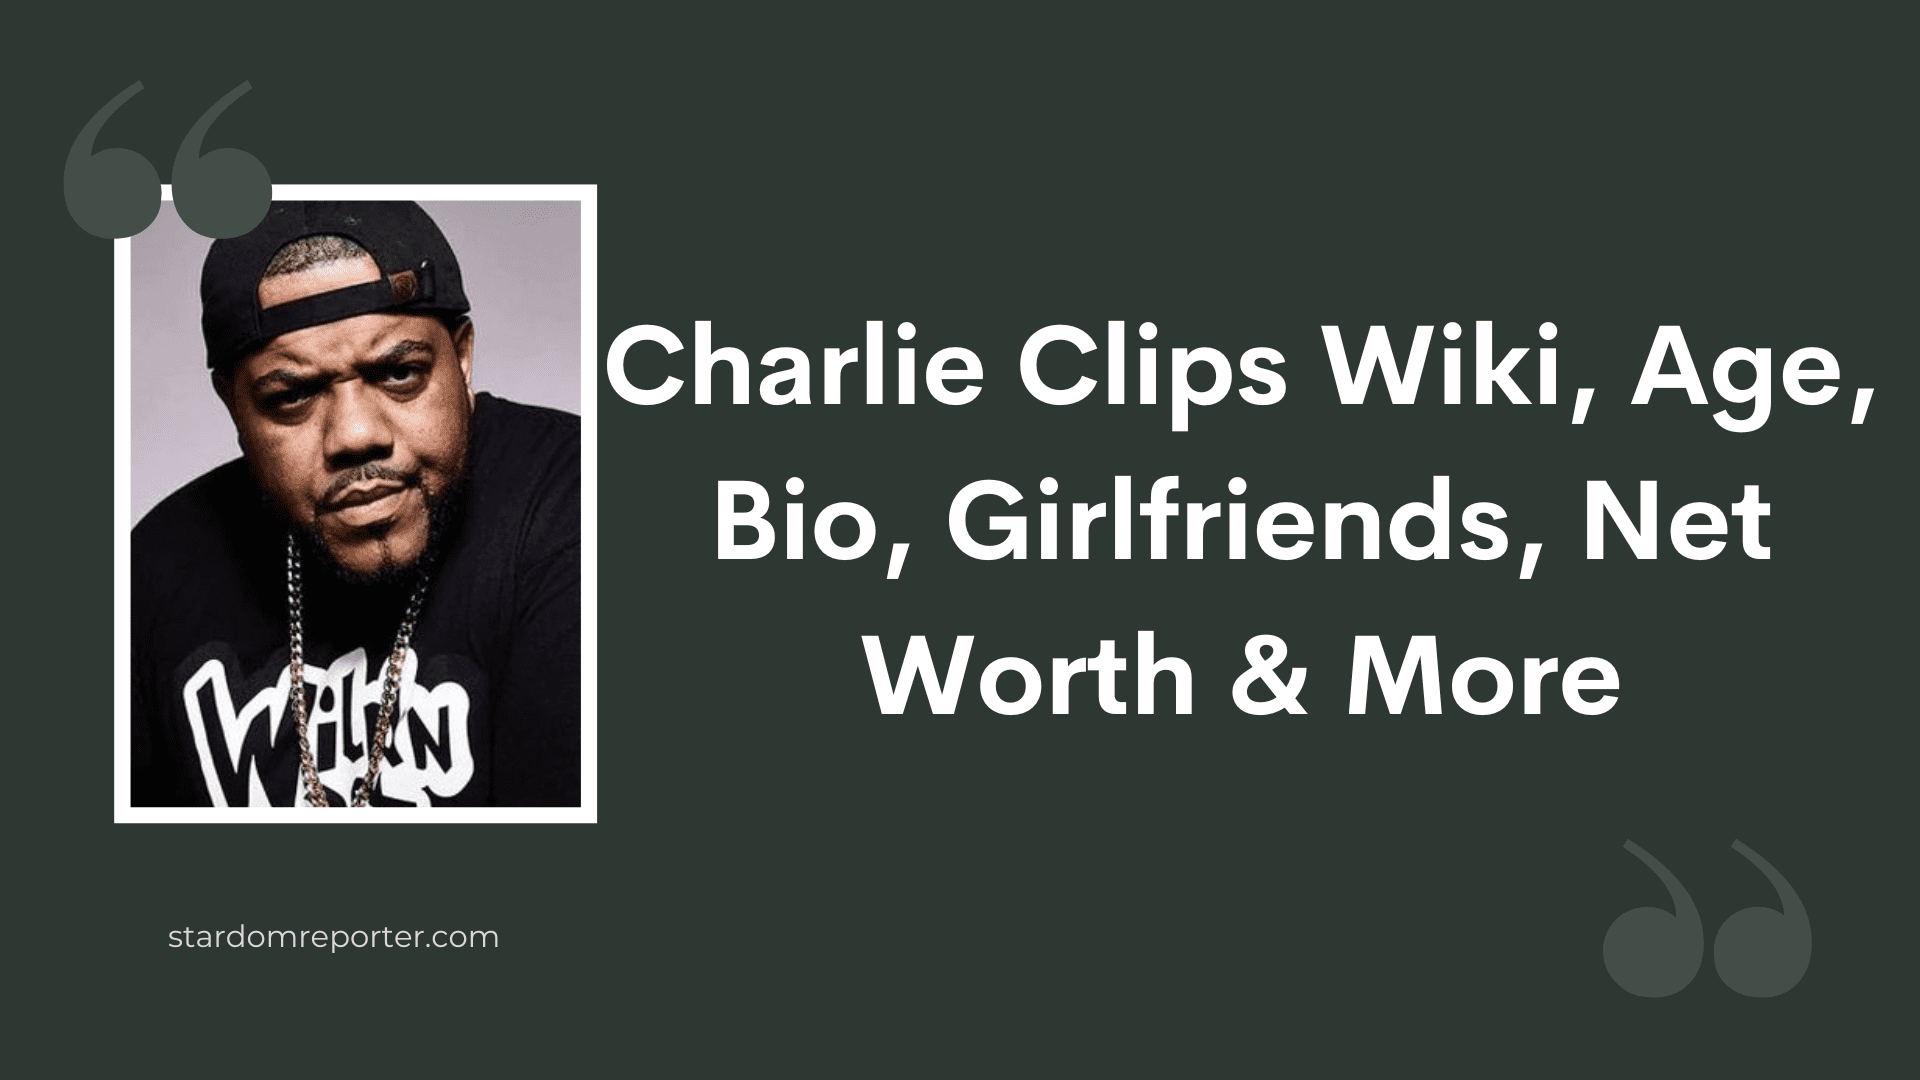 Charlie Clips Wiki, Age, Bio, Girlfriends, Net Worth & More - 17